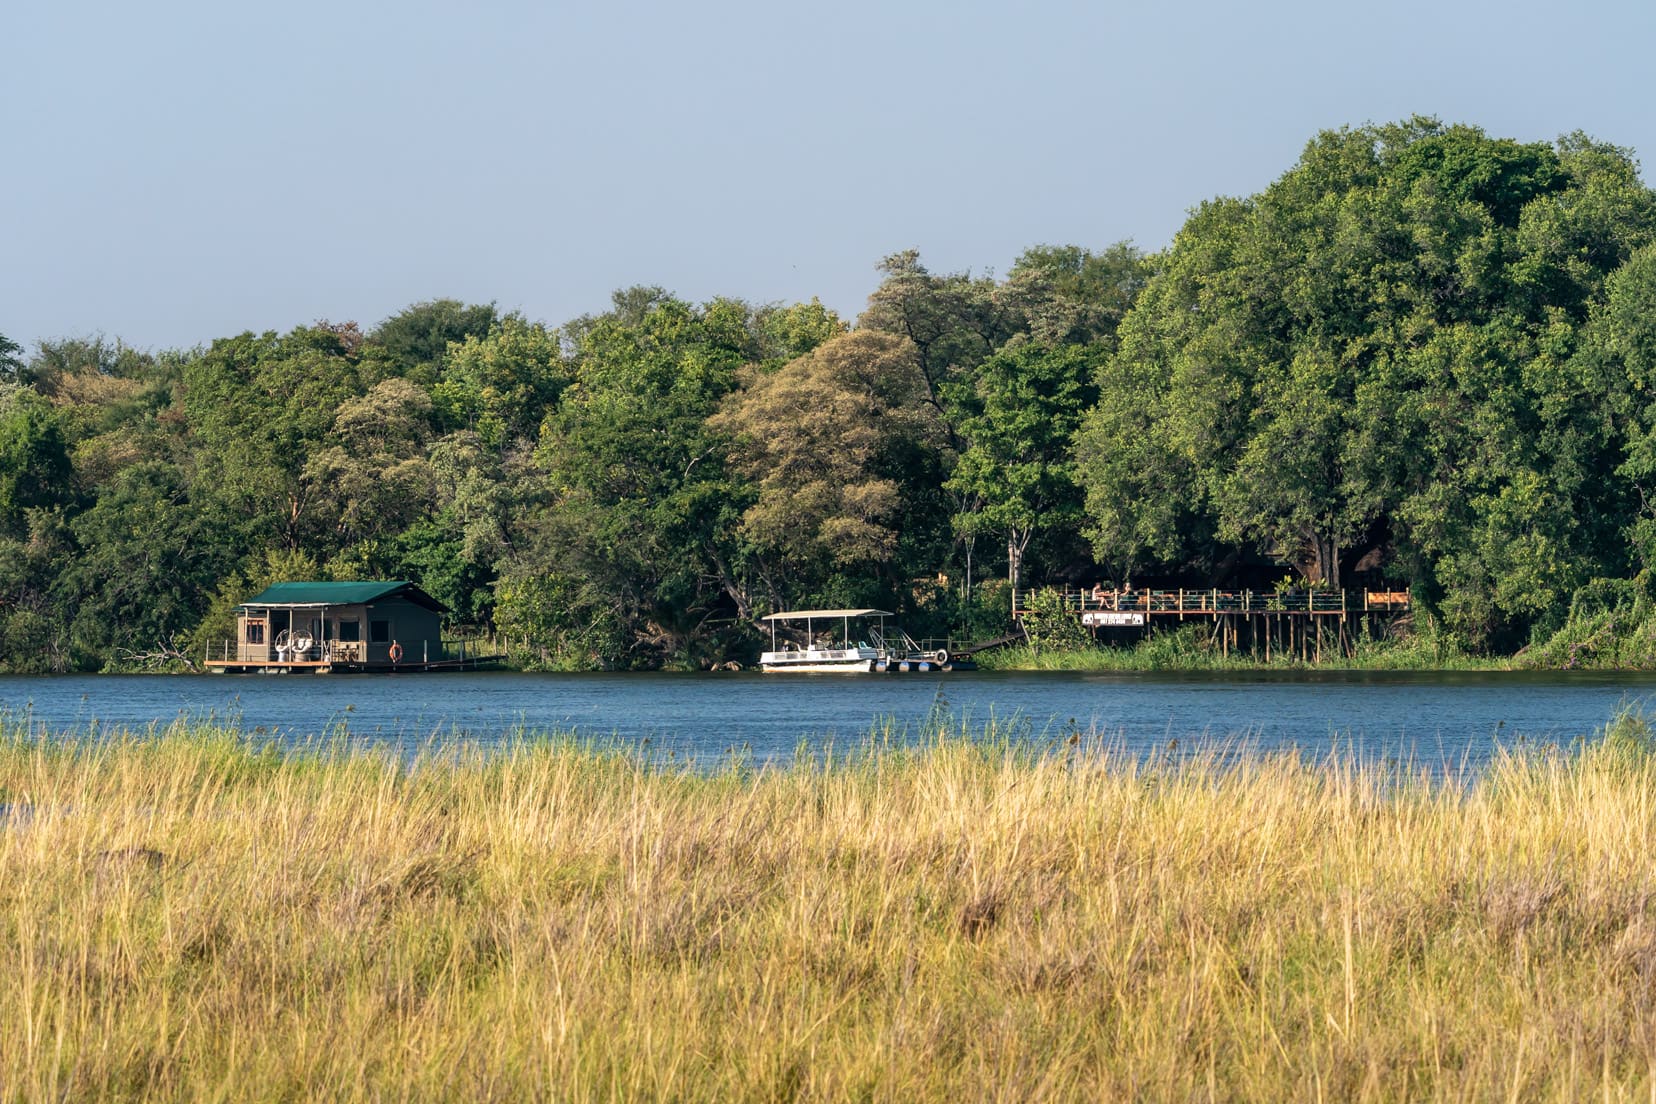 Ndhovu Safari Lodge as seen from the river